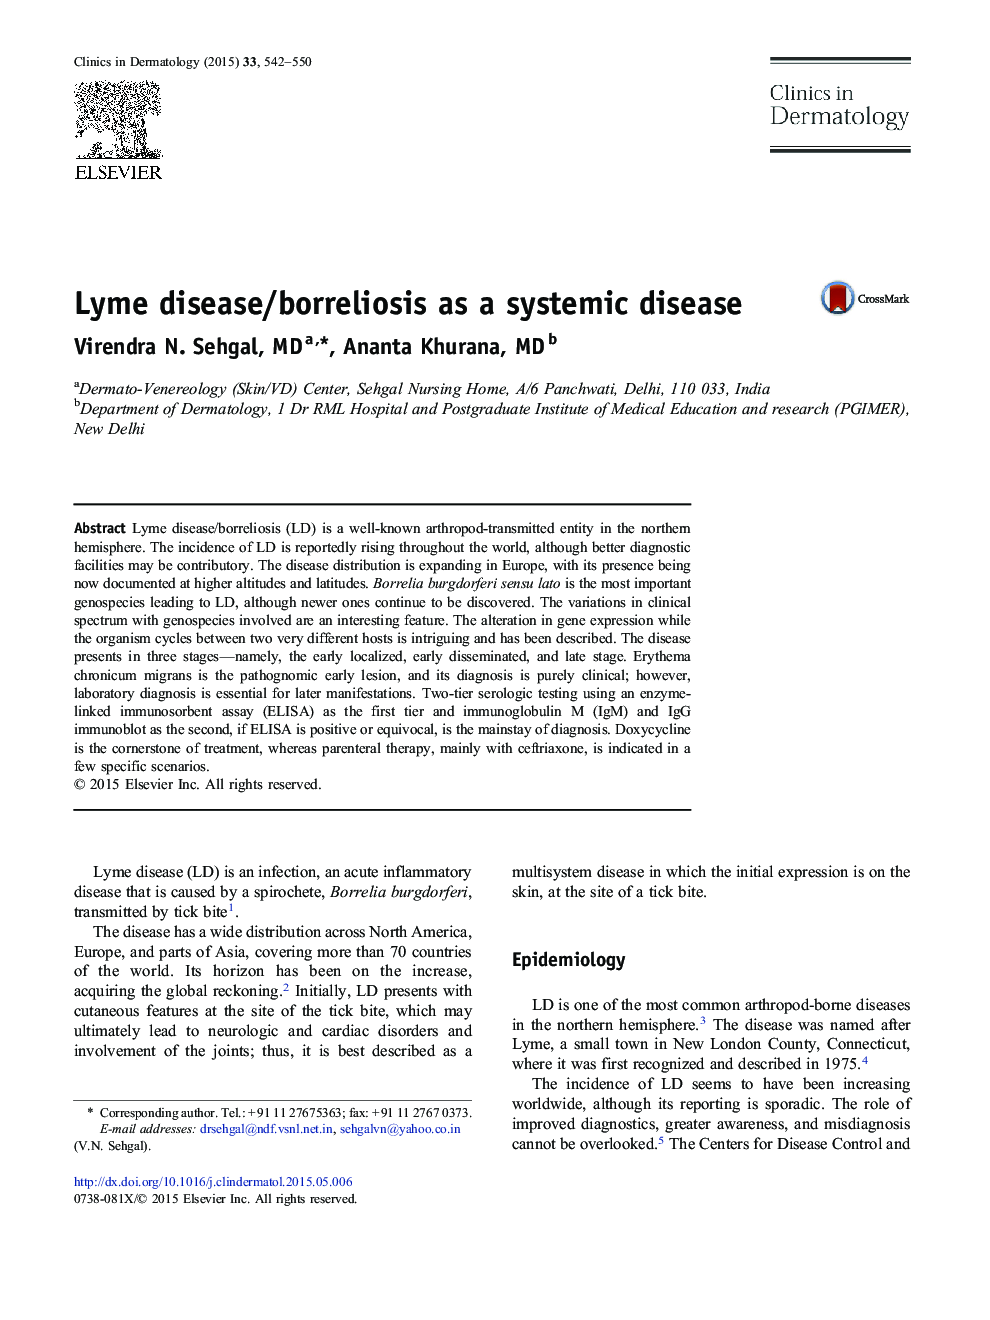 Lyme disease/borreliosis as a systemic disease